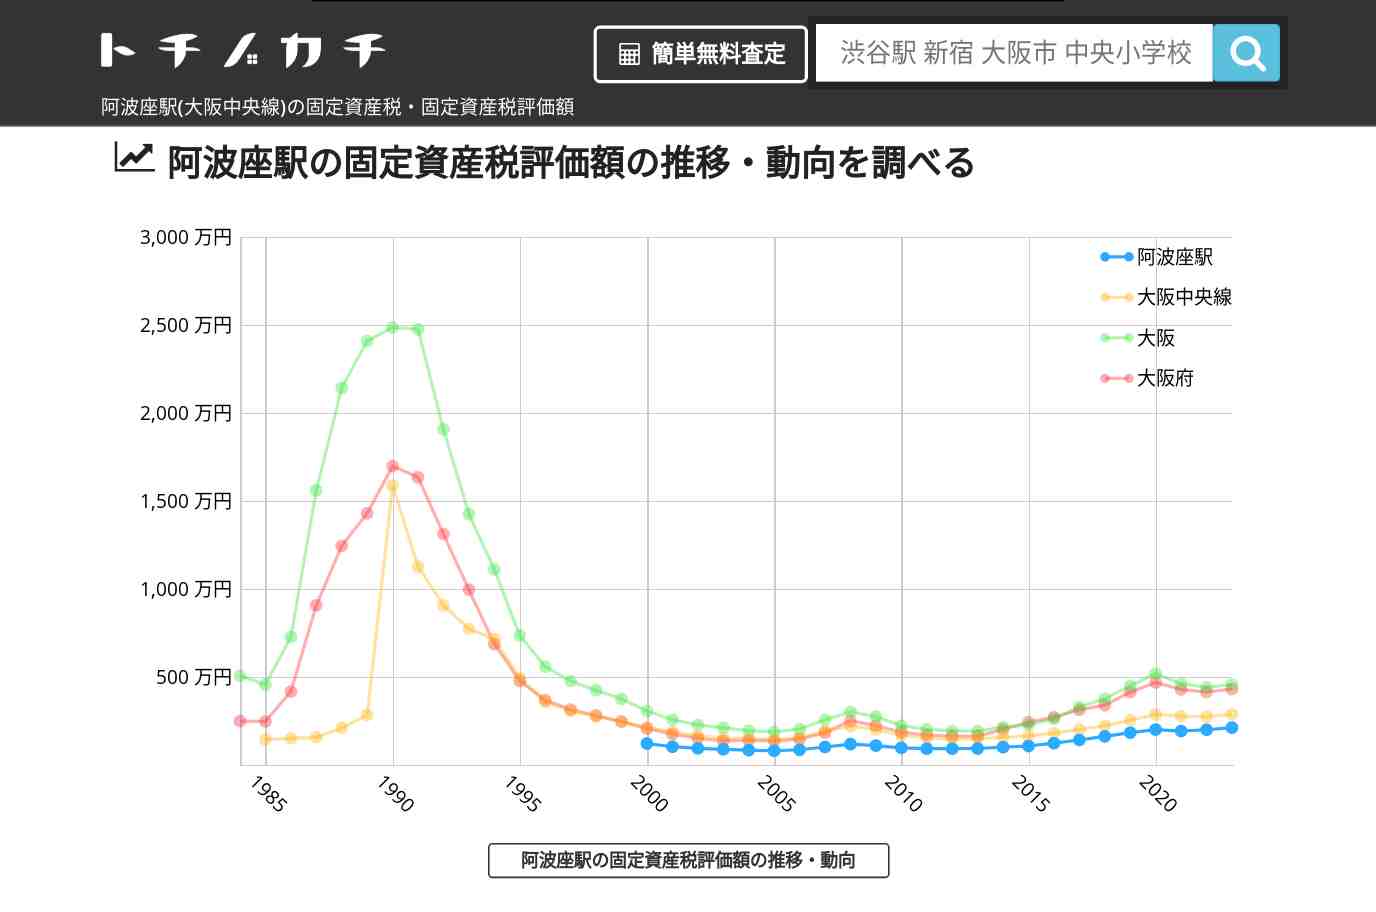 阿波座駅(大阪中央線)の固定資産税・固定資産税評価額 | トチノカチ